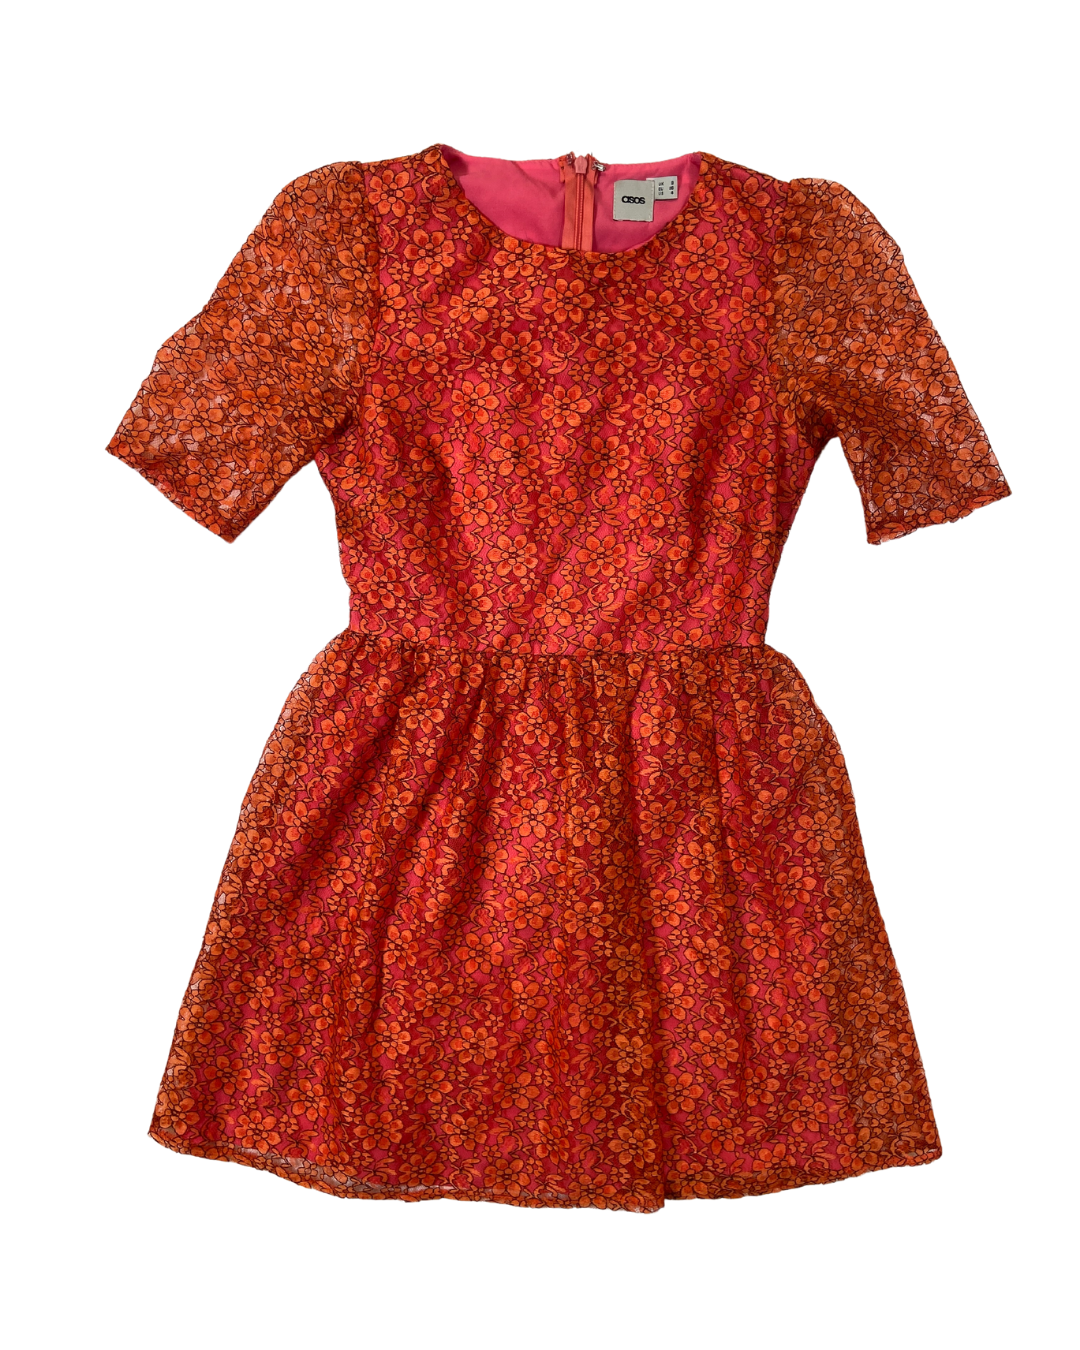 ASOS Orange Floral Mini Dress